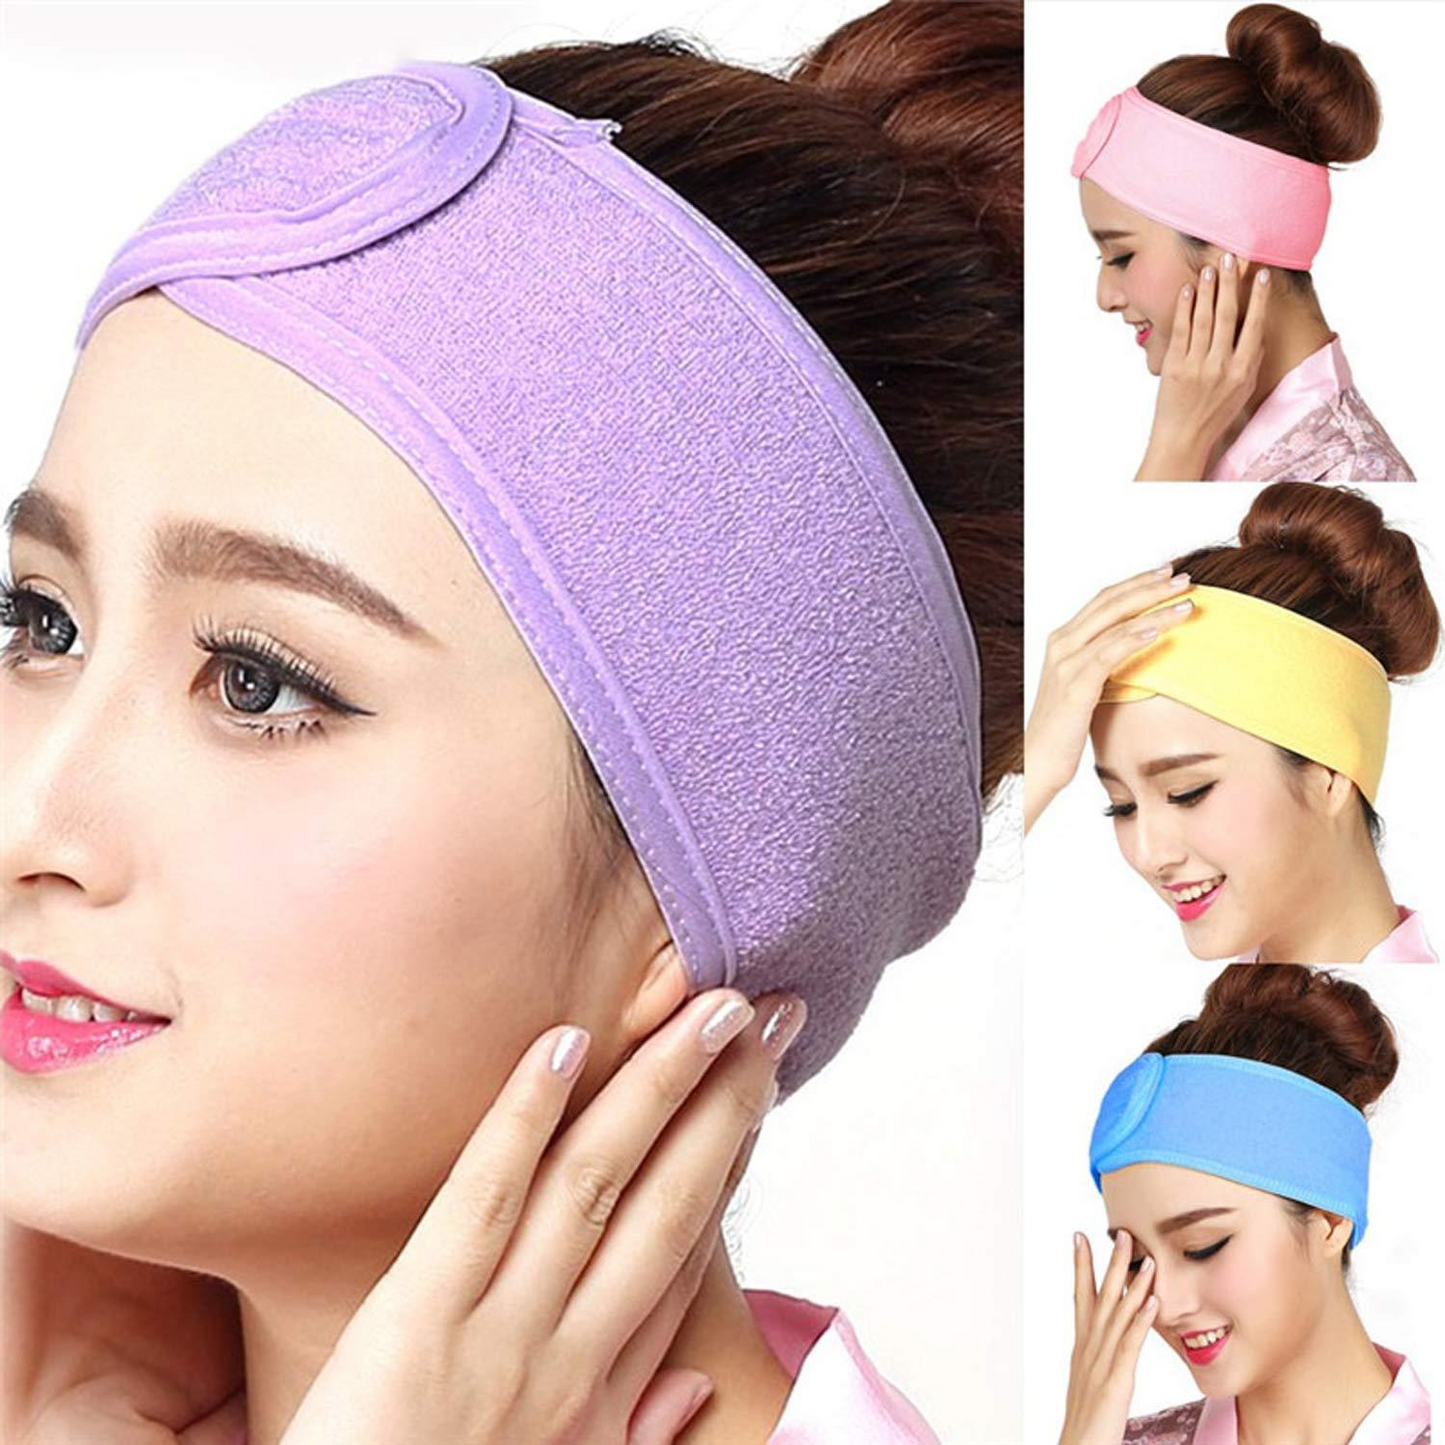 Beauty Head-Cloth Adjustable Facial Band.